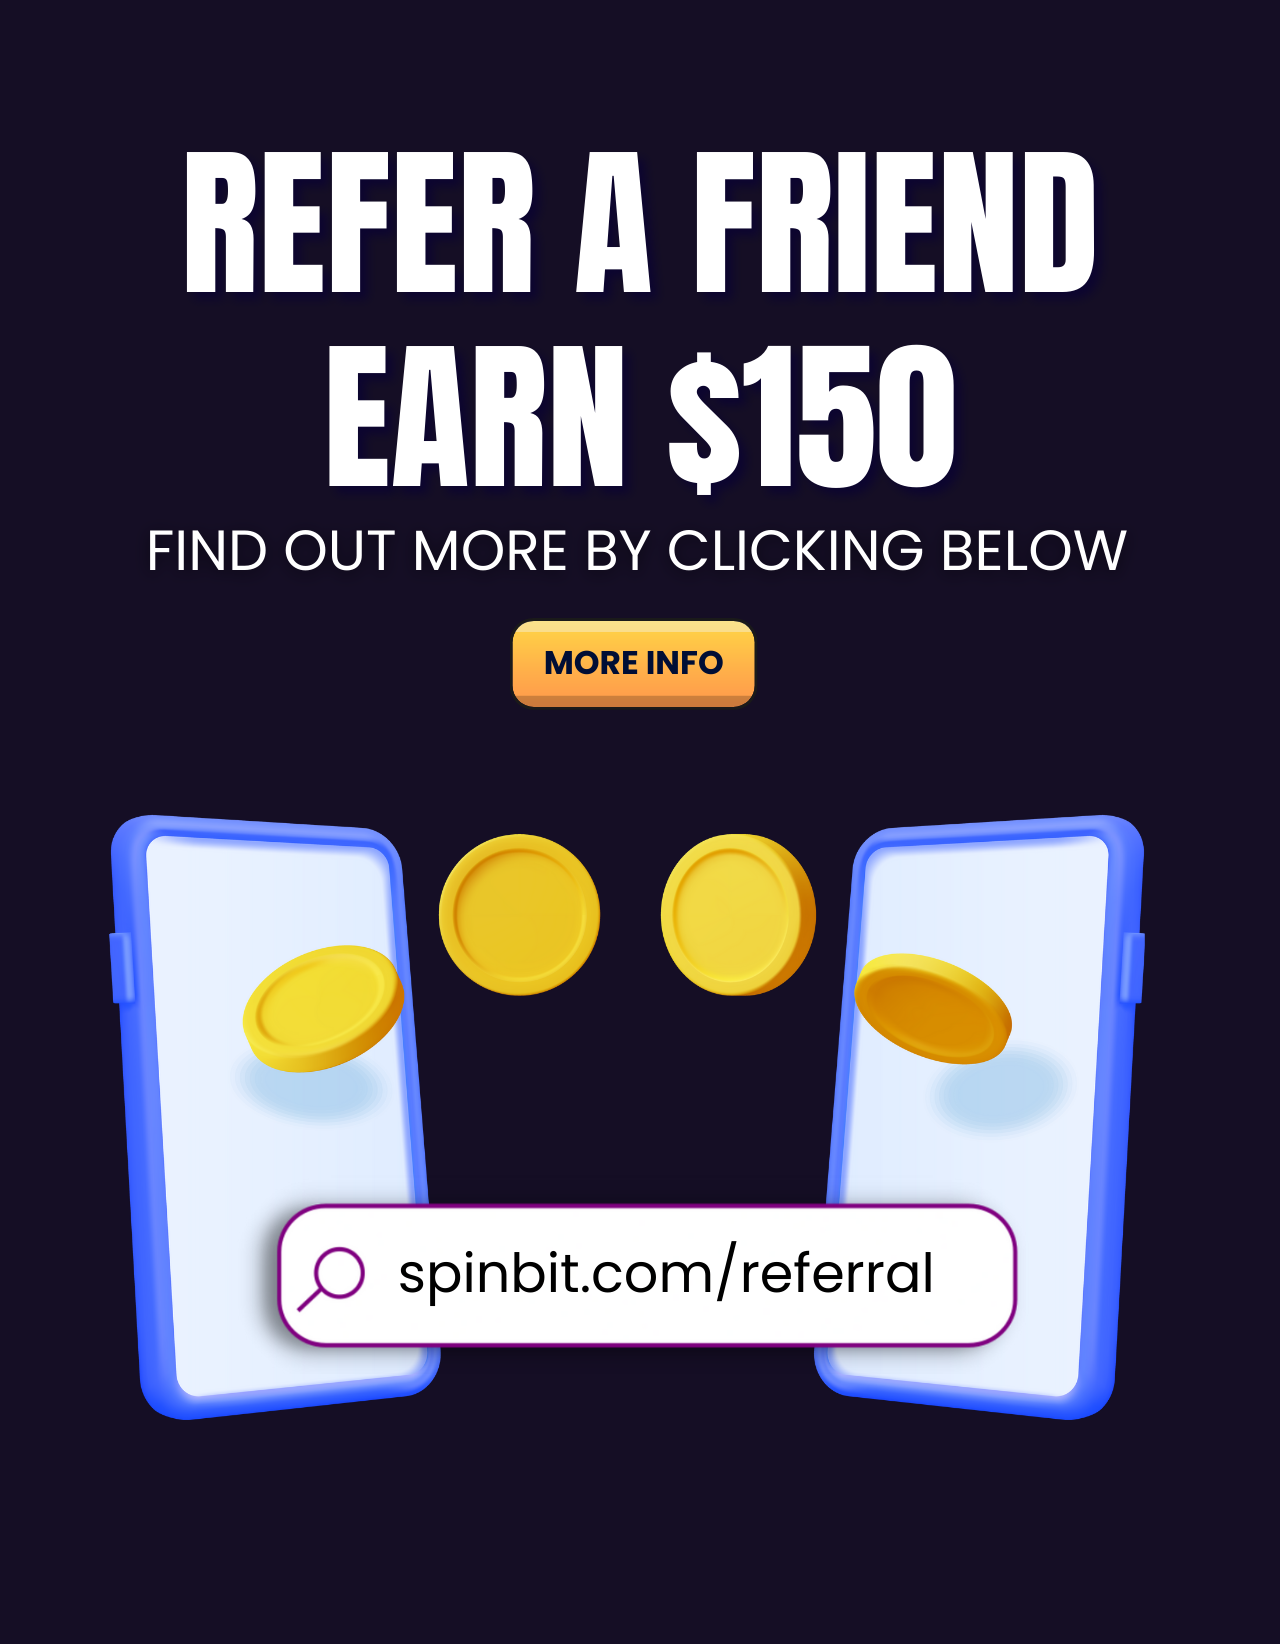 SpinBit Local casino: Premium Online Playing Experience